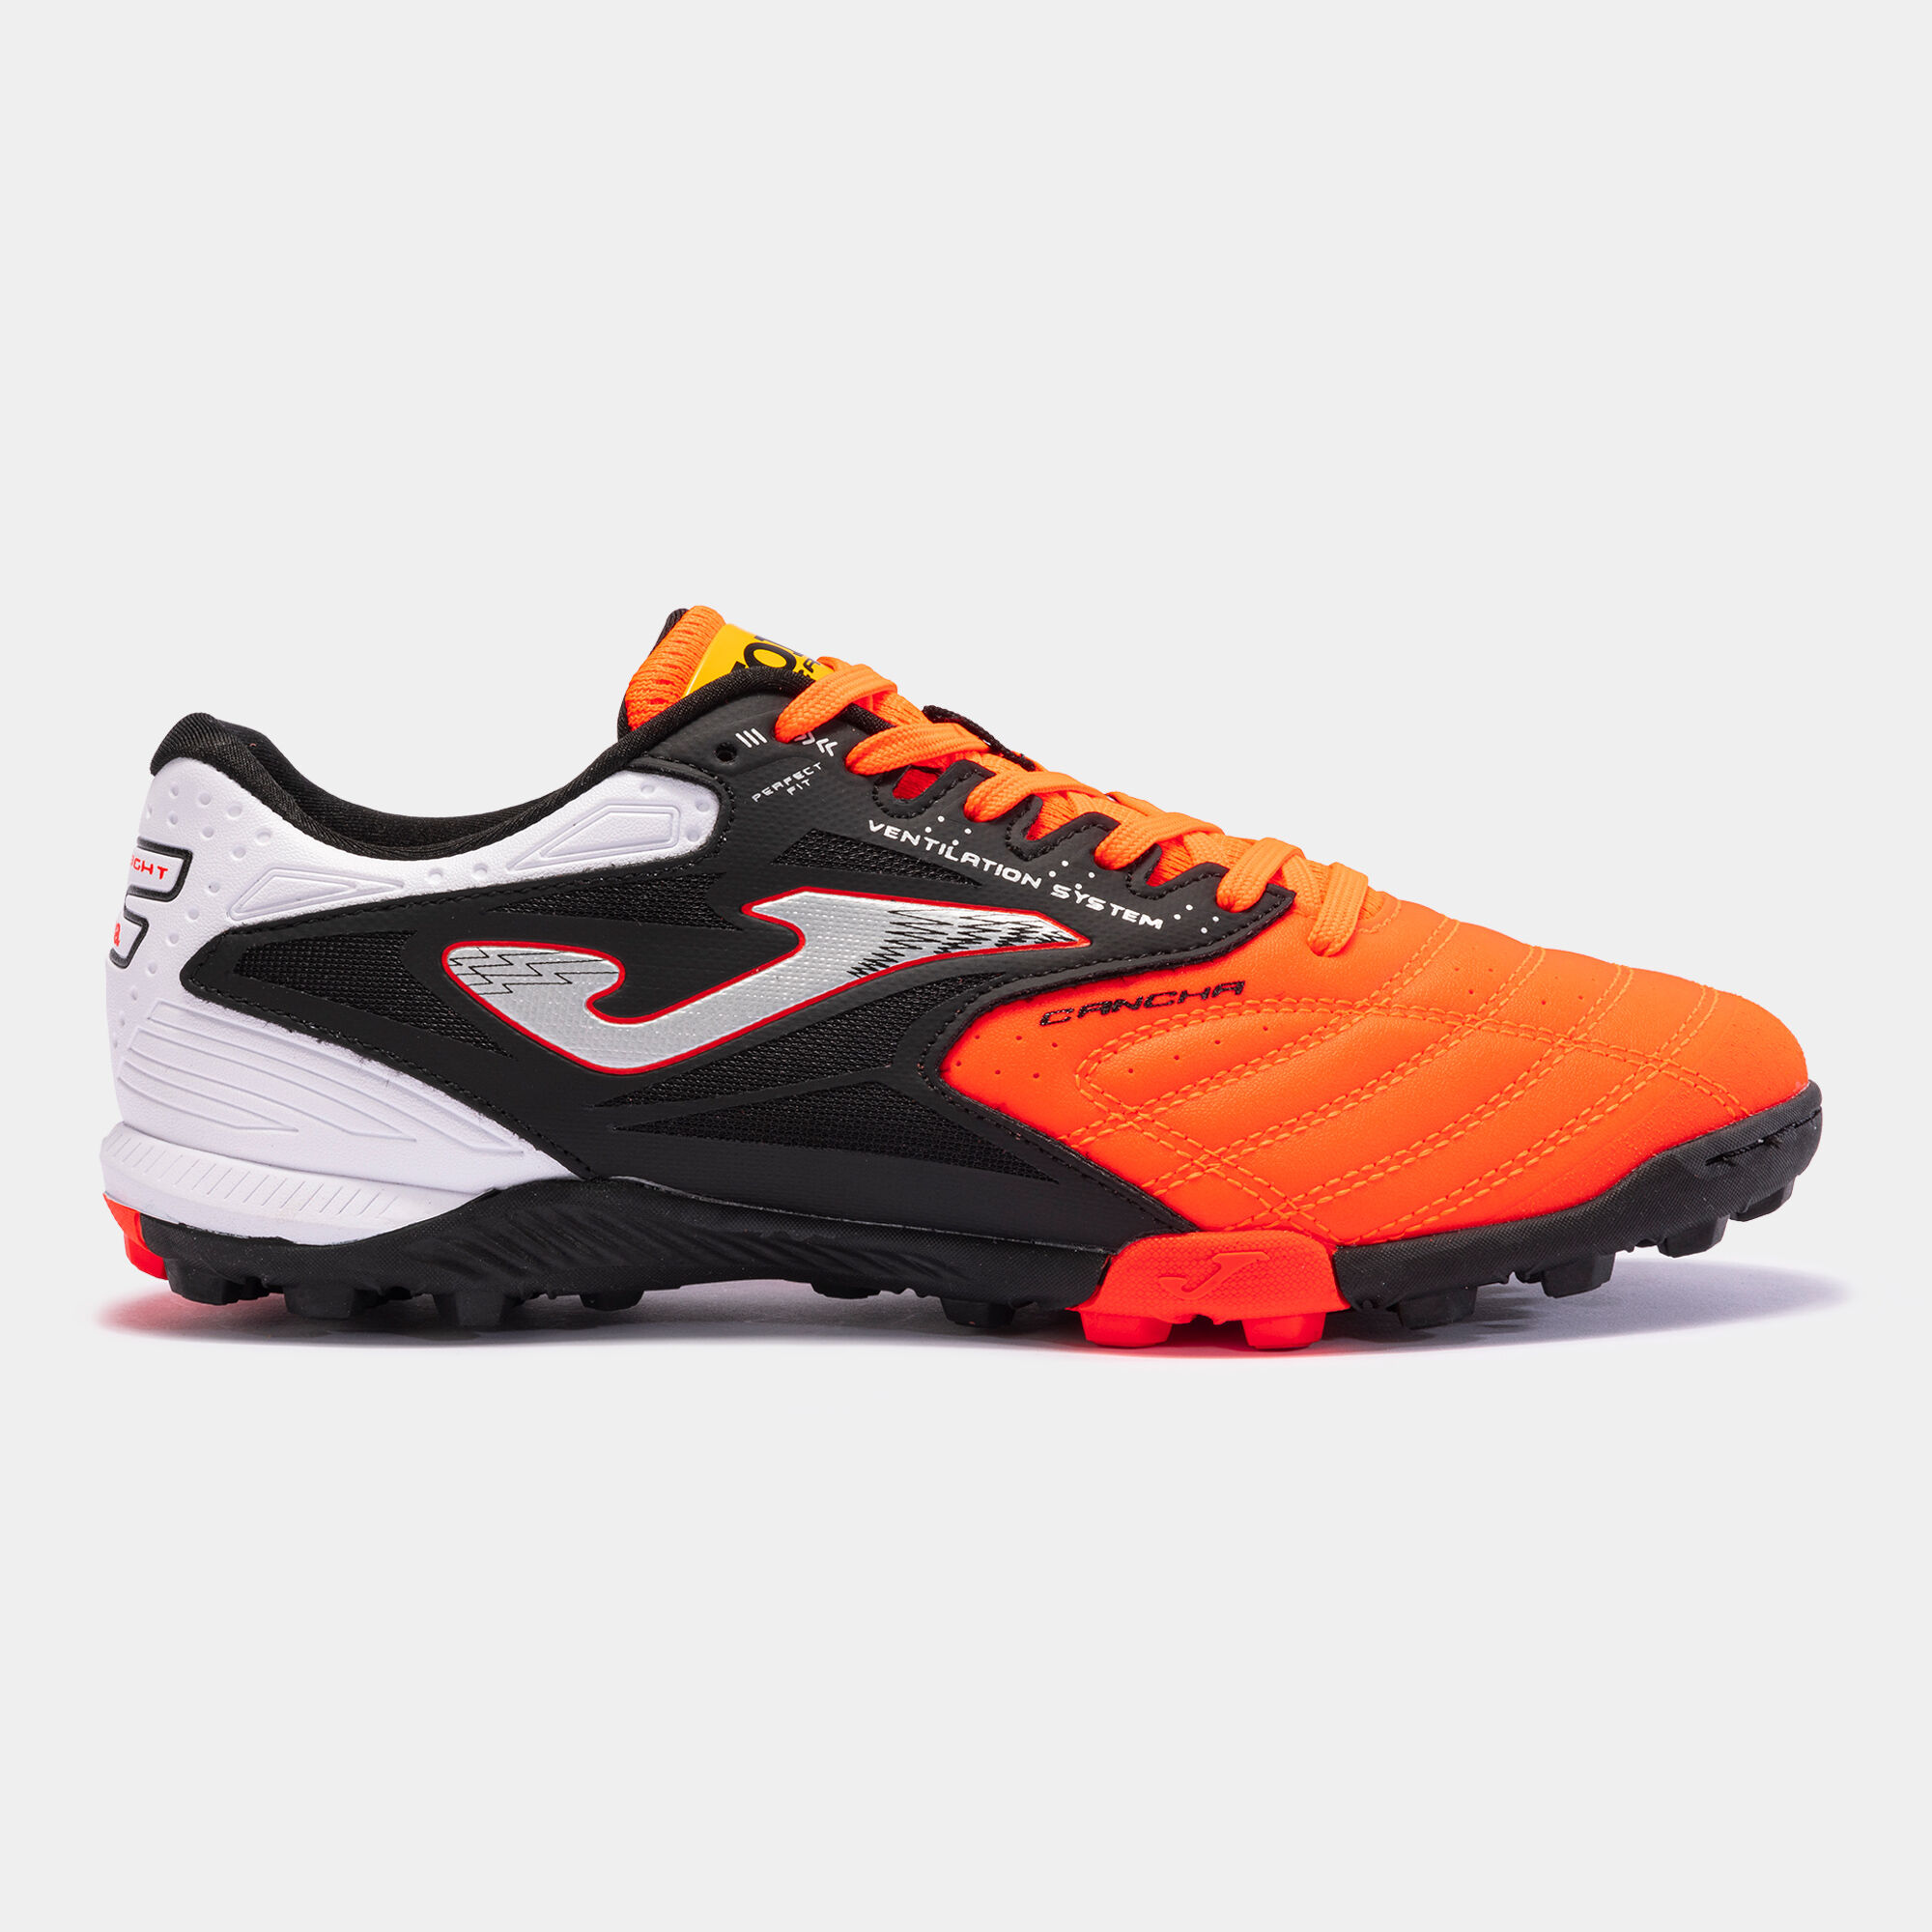 Chaussures football Cancha 23 moquette - turf orange noir